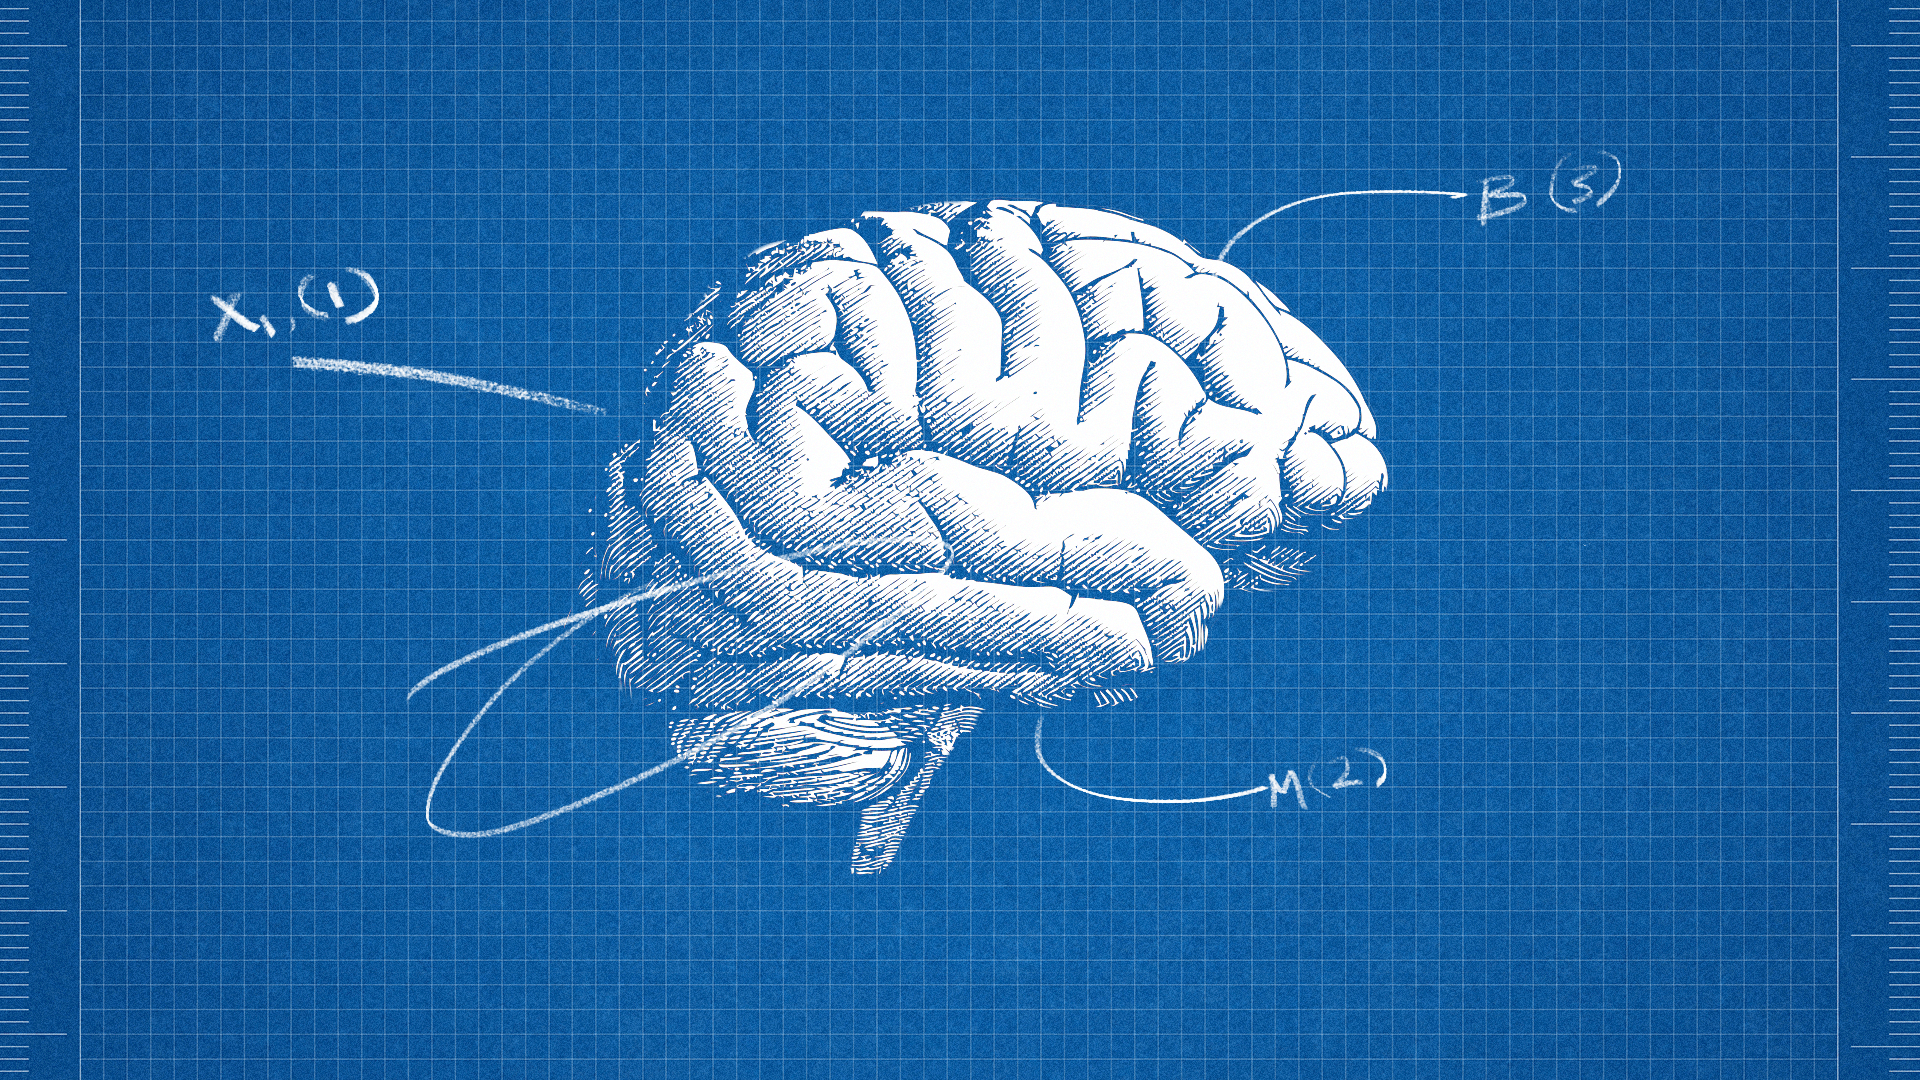 Brain disorder. Головной мозг плакат. Neuro иллюстрации. Плакат головной мозг человека. Мозг Нейро арт.